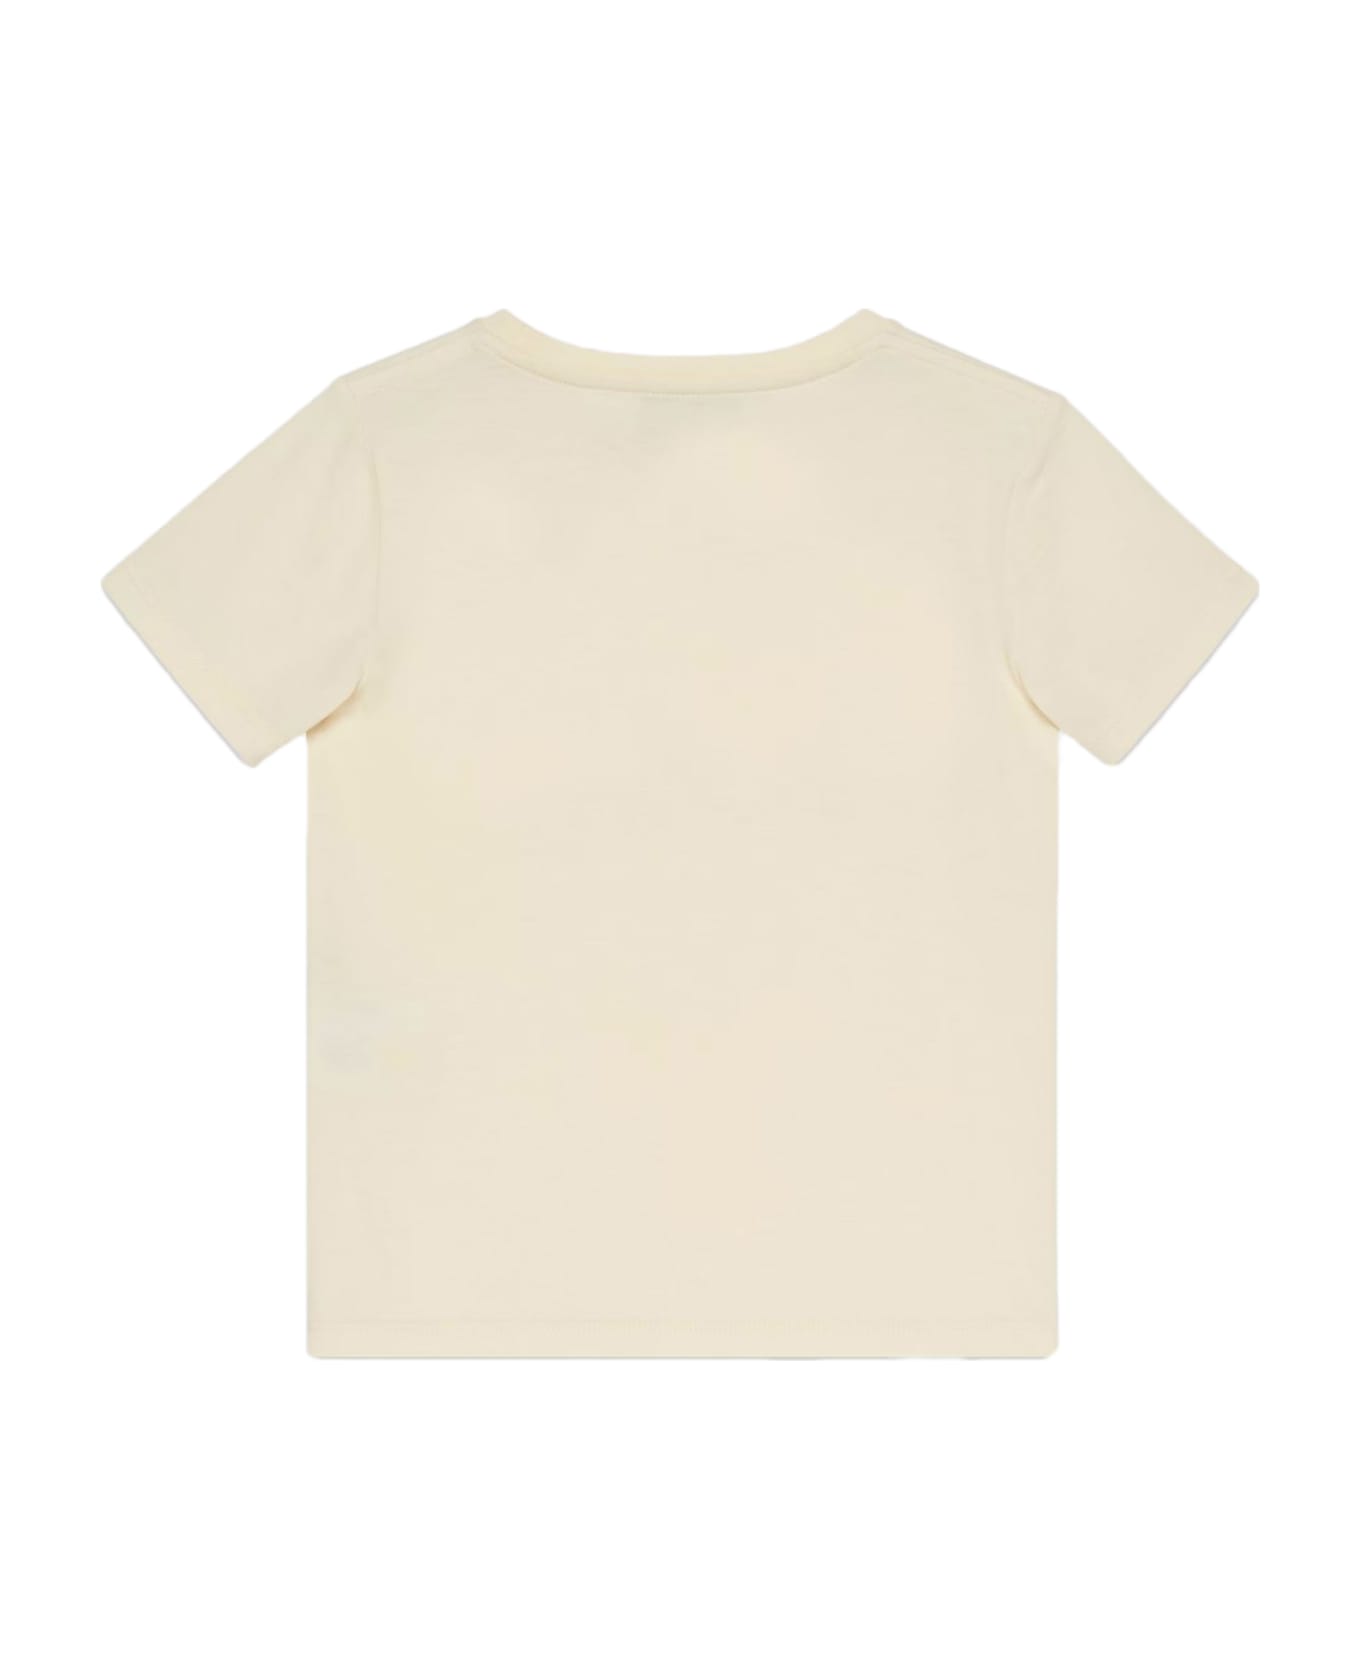 Gucci Children's Cotton Apple Print T-shirt